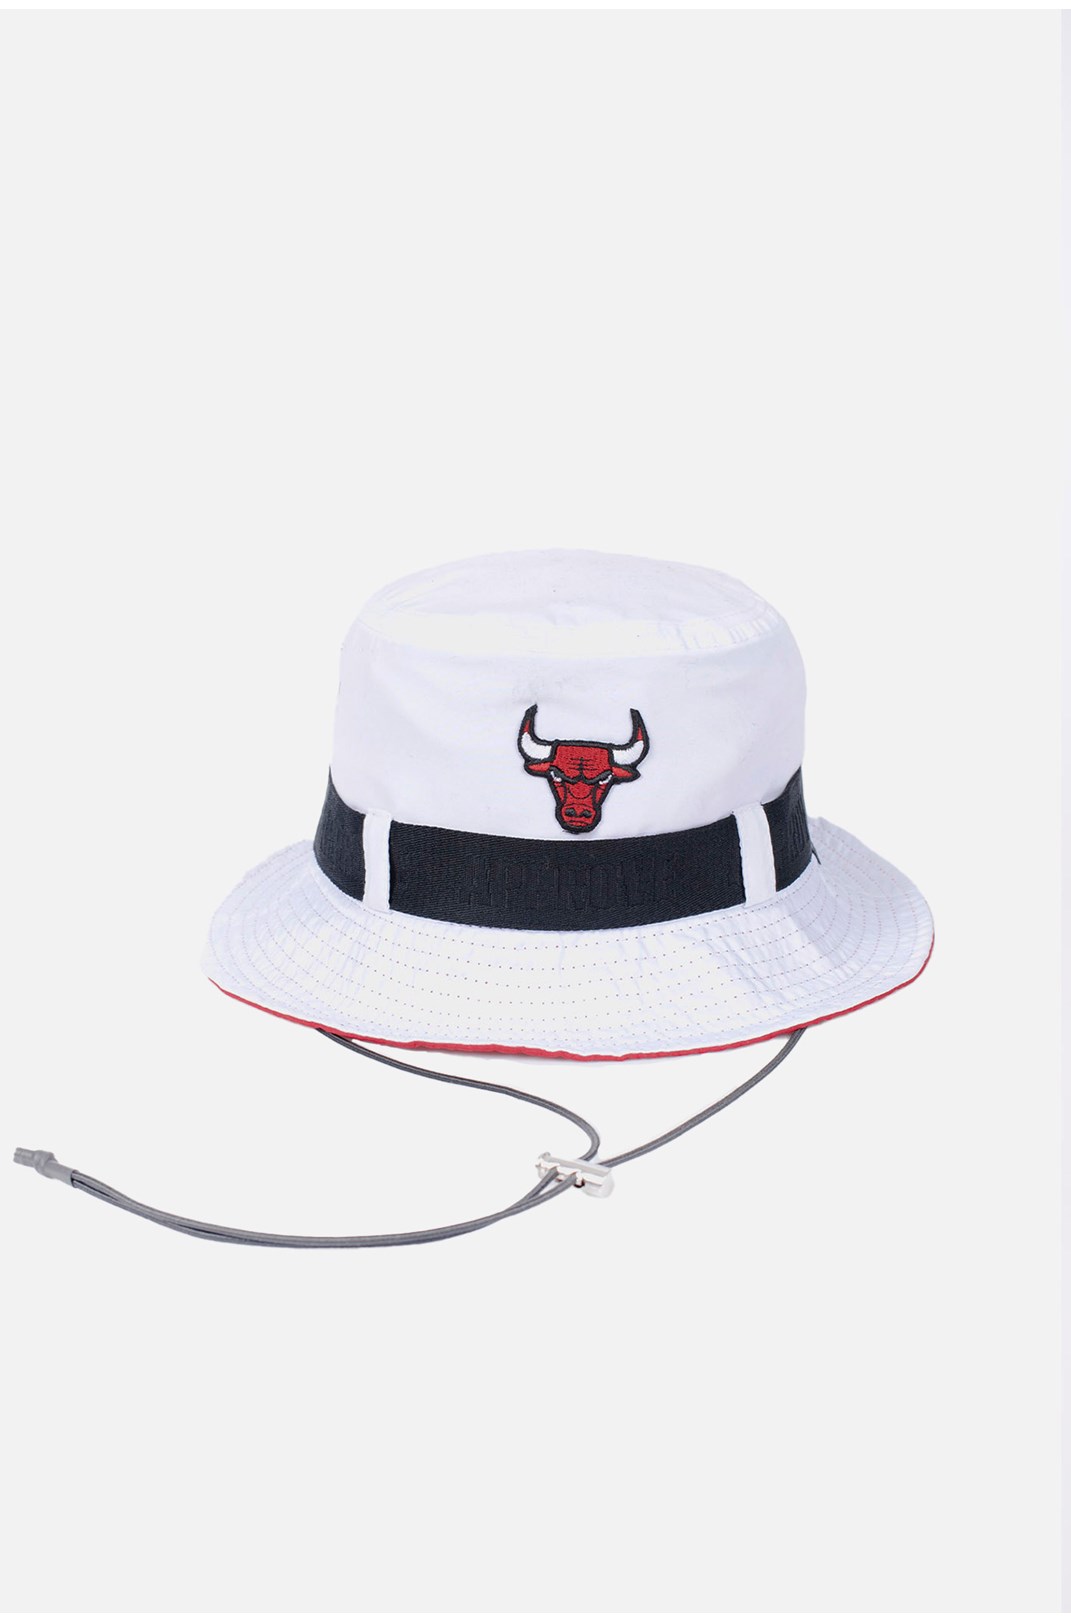 Bucket Approve X Nba Bulls Vermelho e Branco